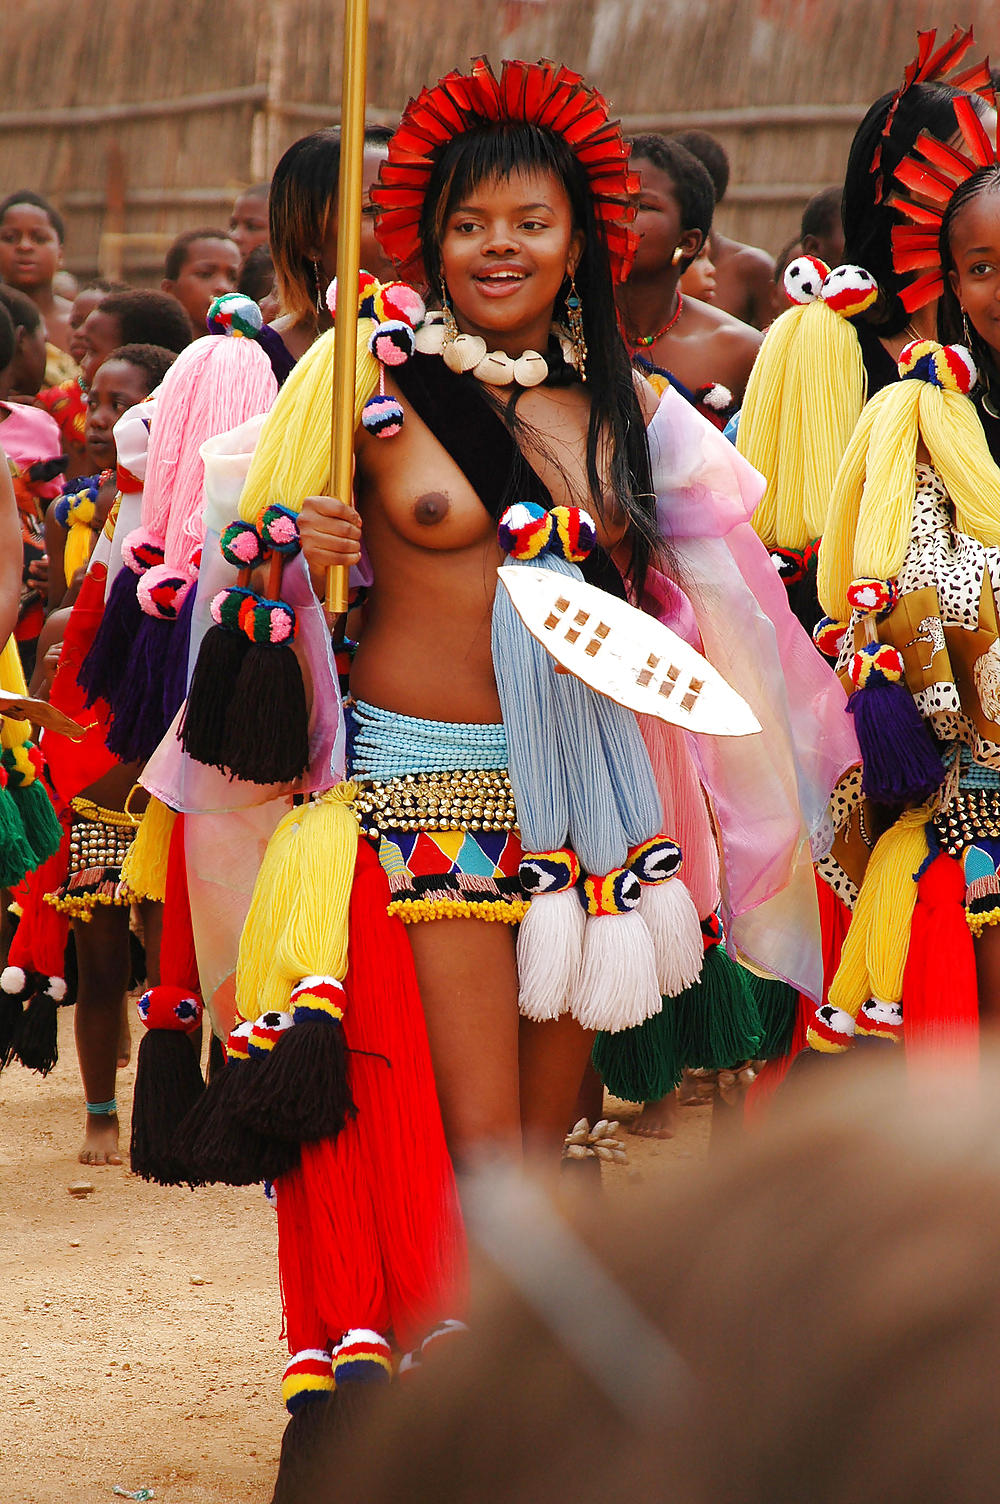 Gruppi di ragazze nude 008 - celebrazioni tribali africane 2
 #17191593